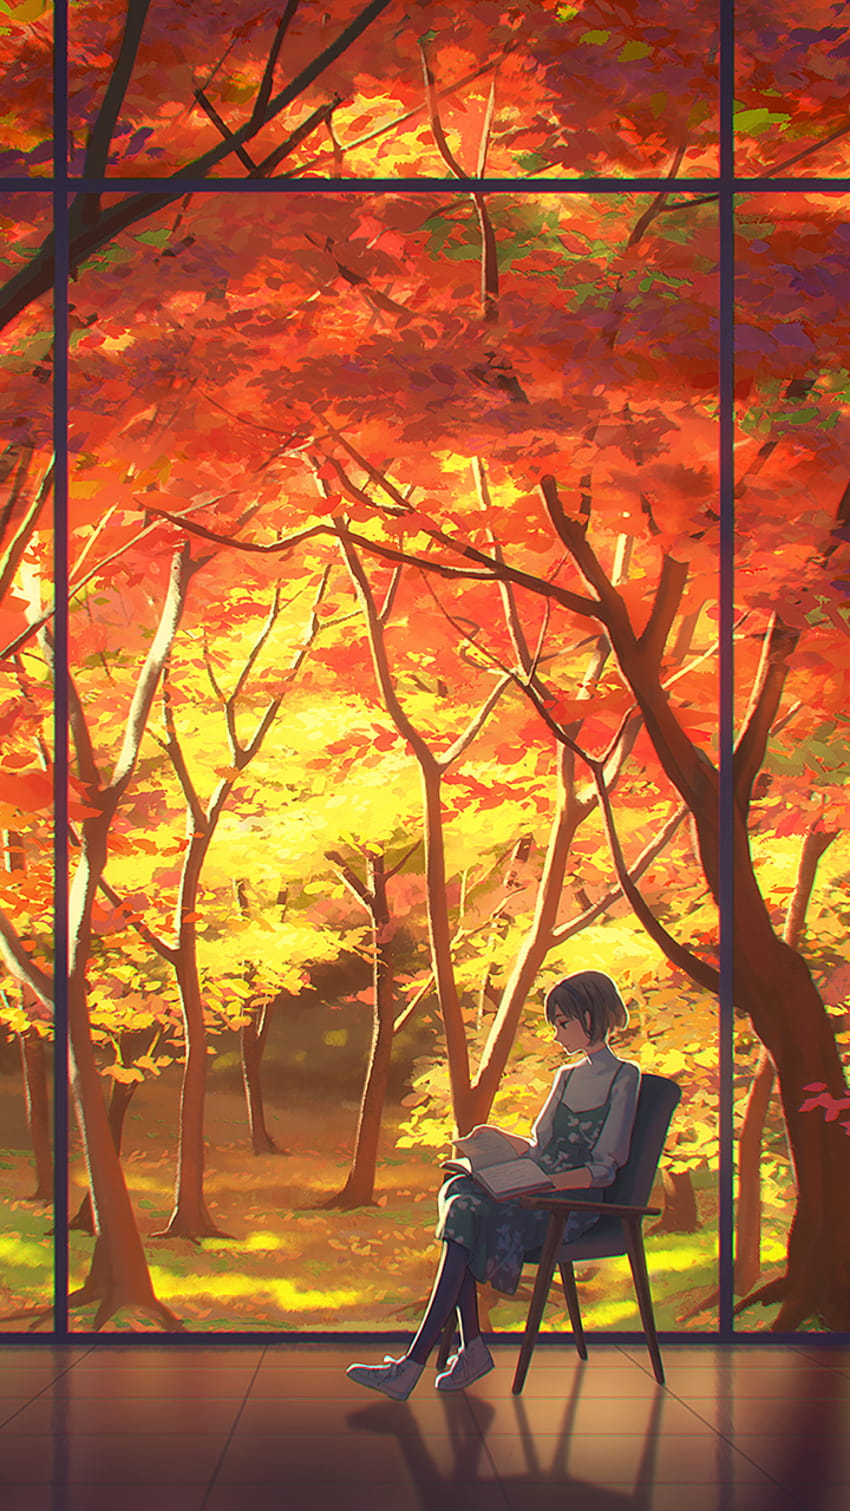 Autumn season Computer Wallpapers Desktop Backgrounds  1600x800   ID602085  Scenery wallpaper Anime scenery Autumn wallpaper hd